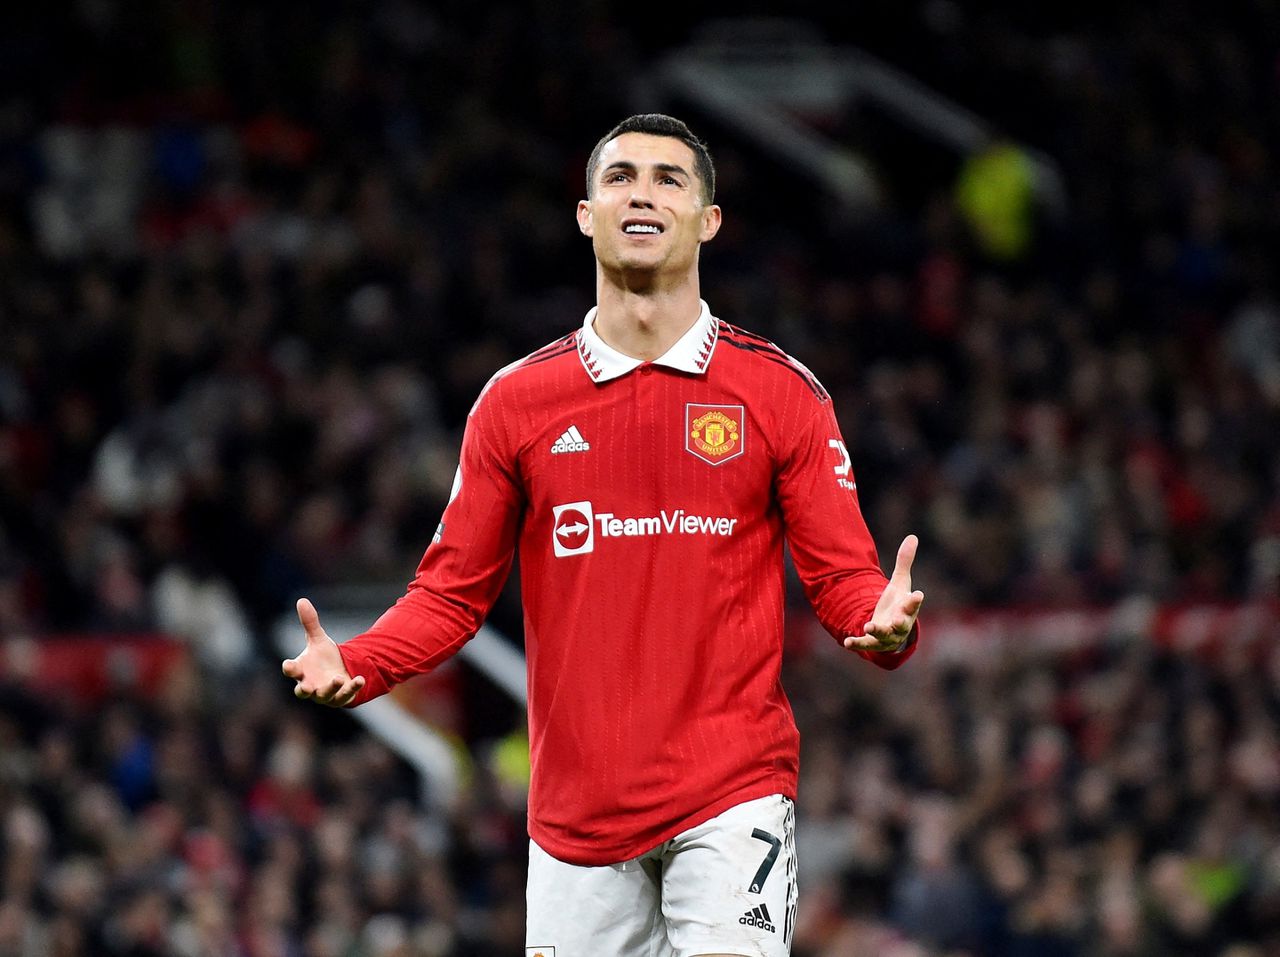 Opheldering muur Persoon belast met sportgame Cristiano Ronaldo per direct weg bij Manchester United - NRC